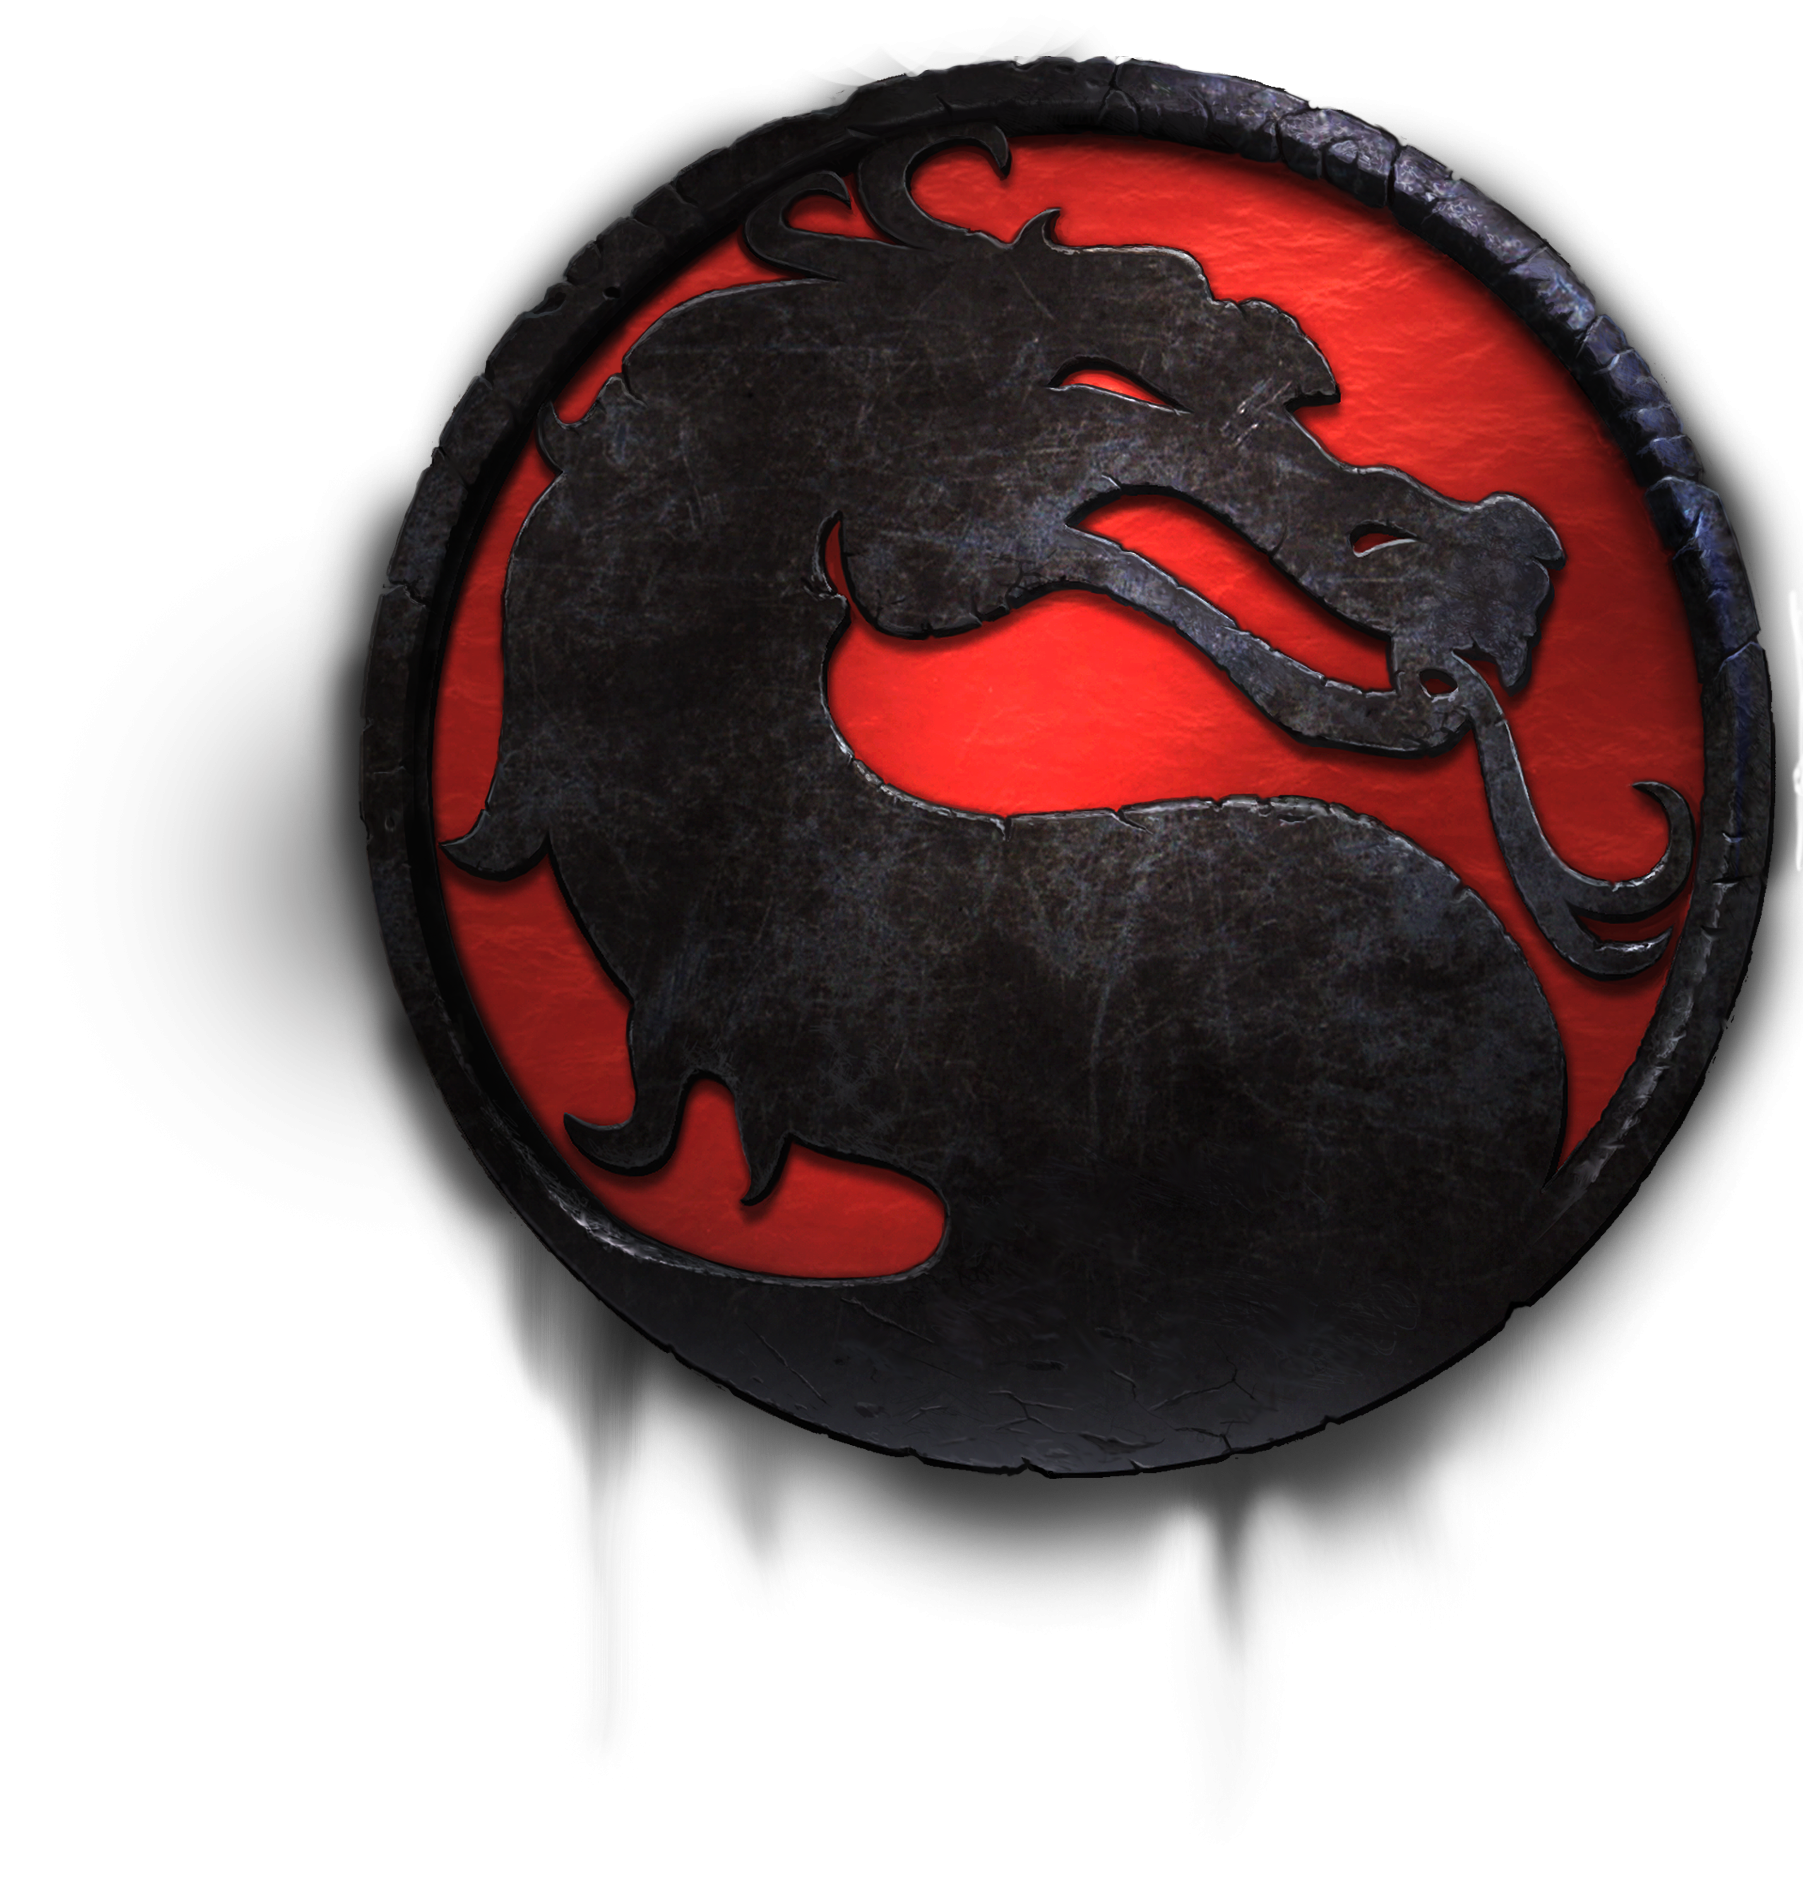 Красный мортал комбат. Мортал комбат. Mortal Kombat дракон. Значок Mortal Kombat MK. Мортал комбат значок дракона.